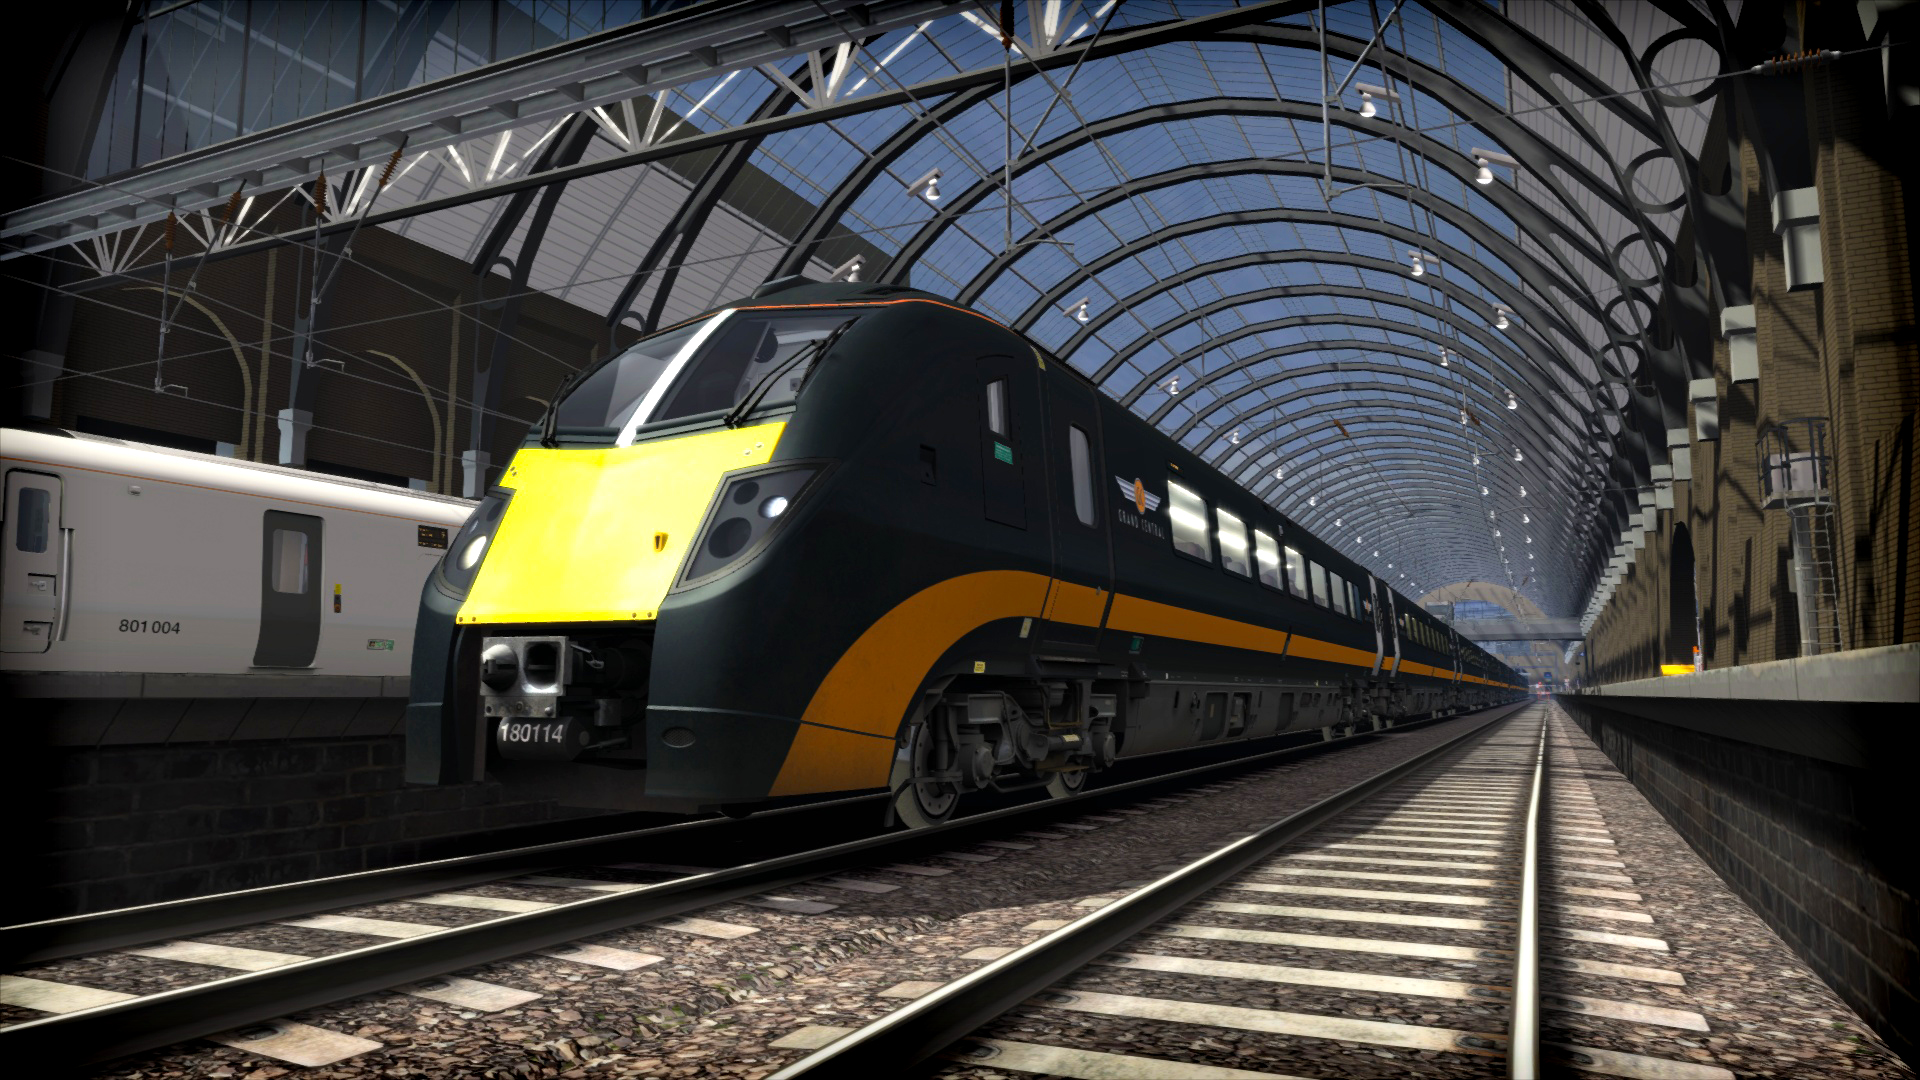 Train Simulator Classic - Grand Central Class 180 'Adelante' DMU Add-On DLC Steam CD Key 0.44 USD